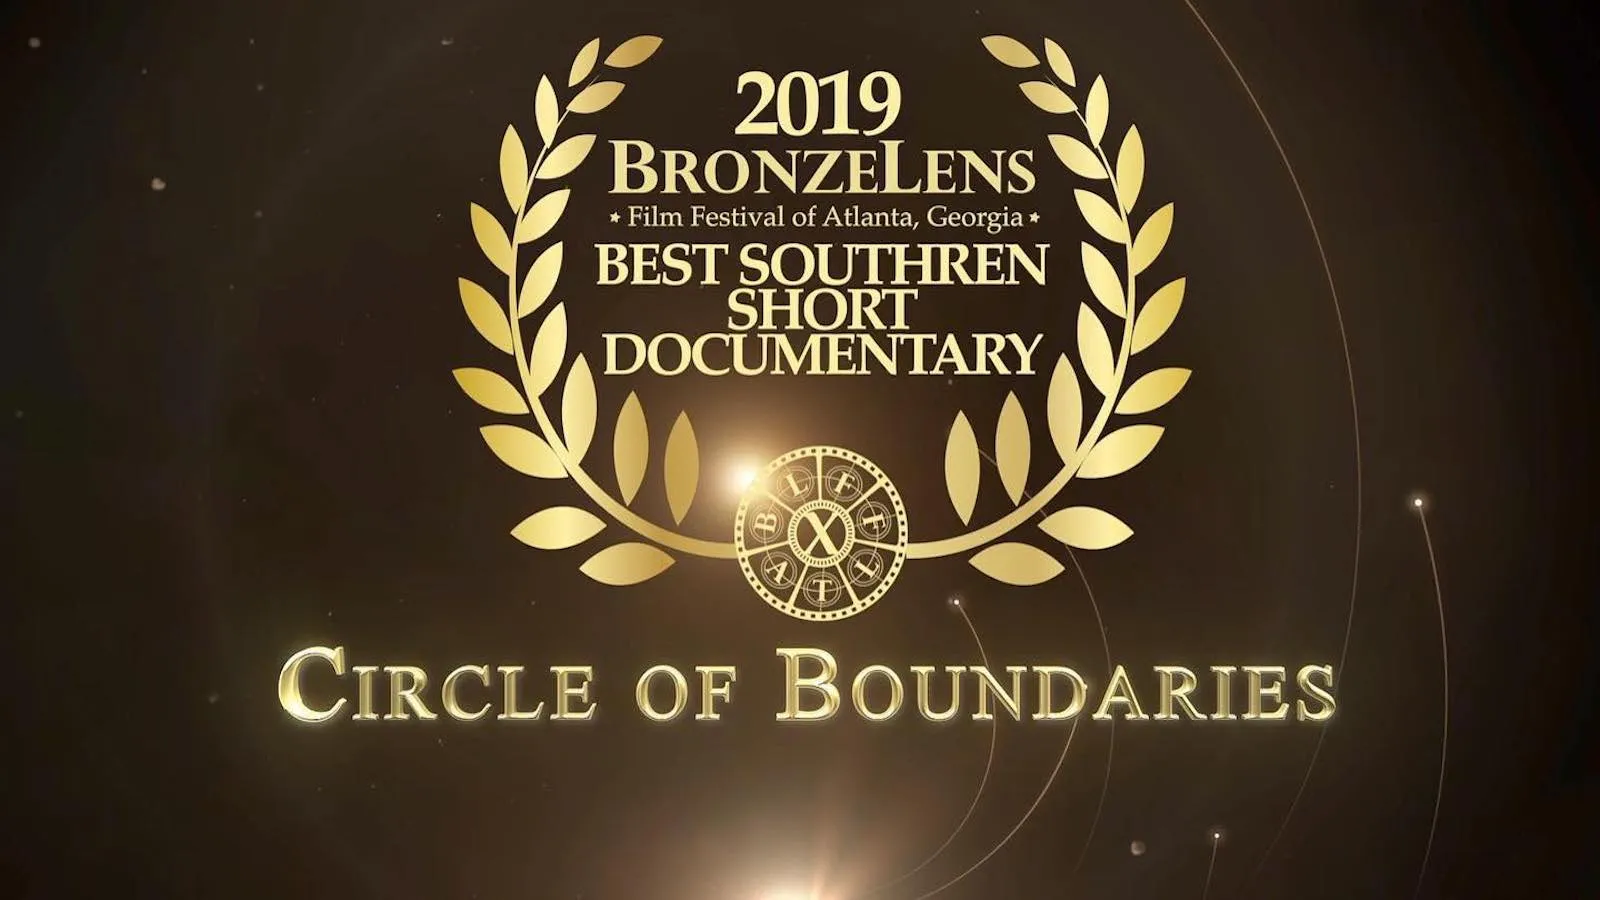 Reel South SHORT Award announcement poster for Circle of Boundaries